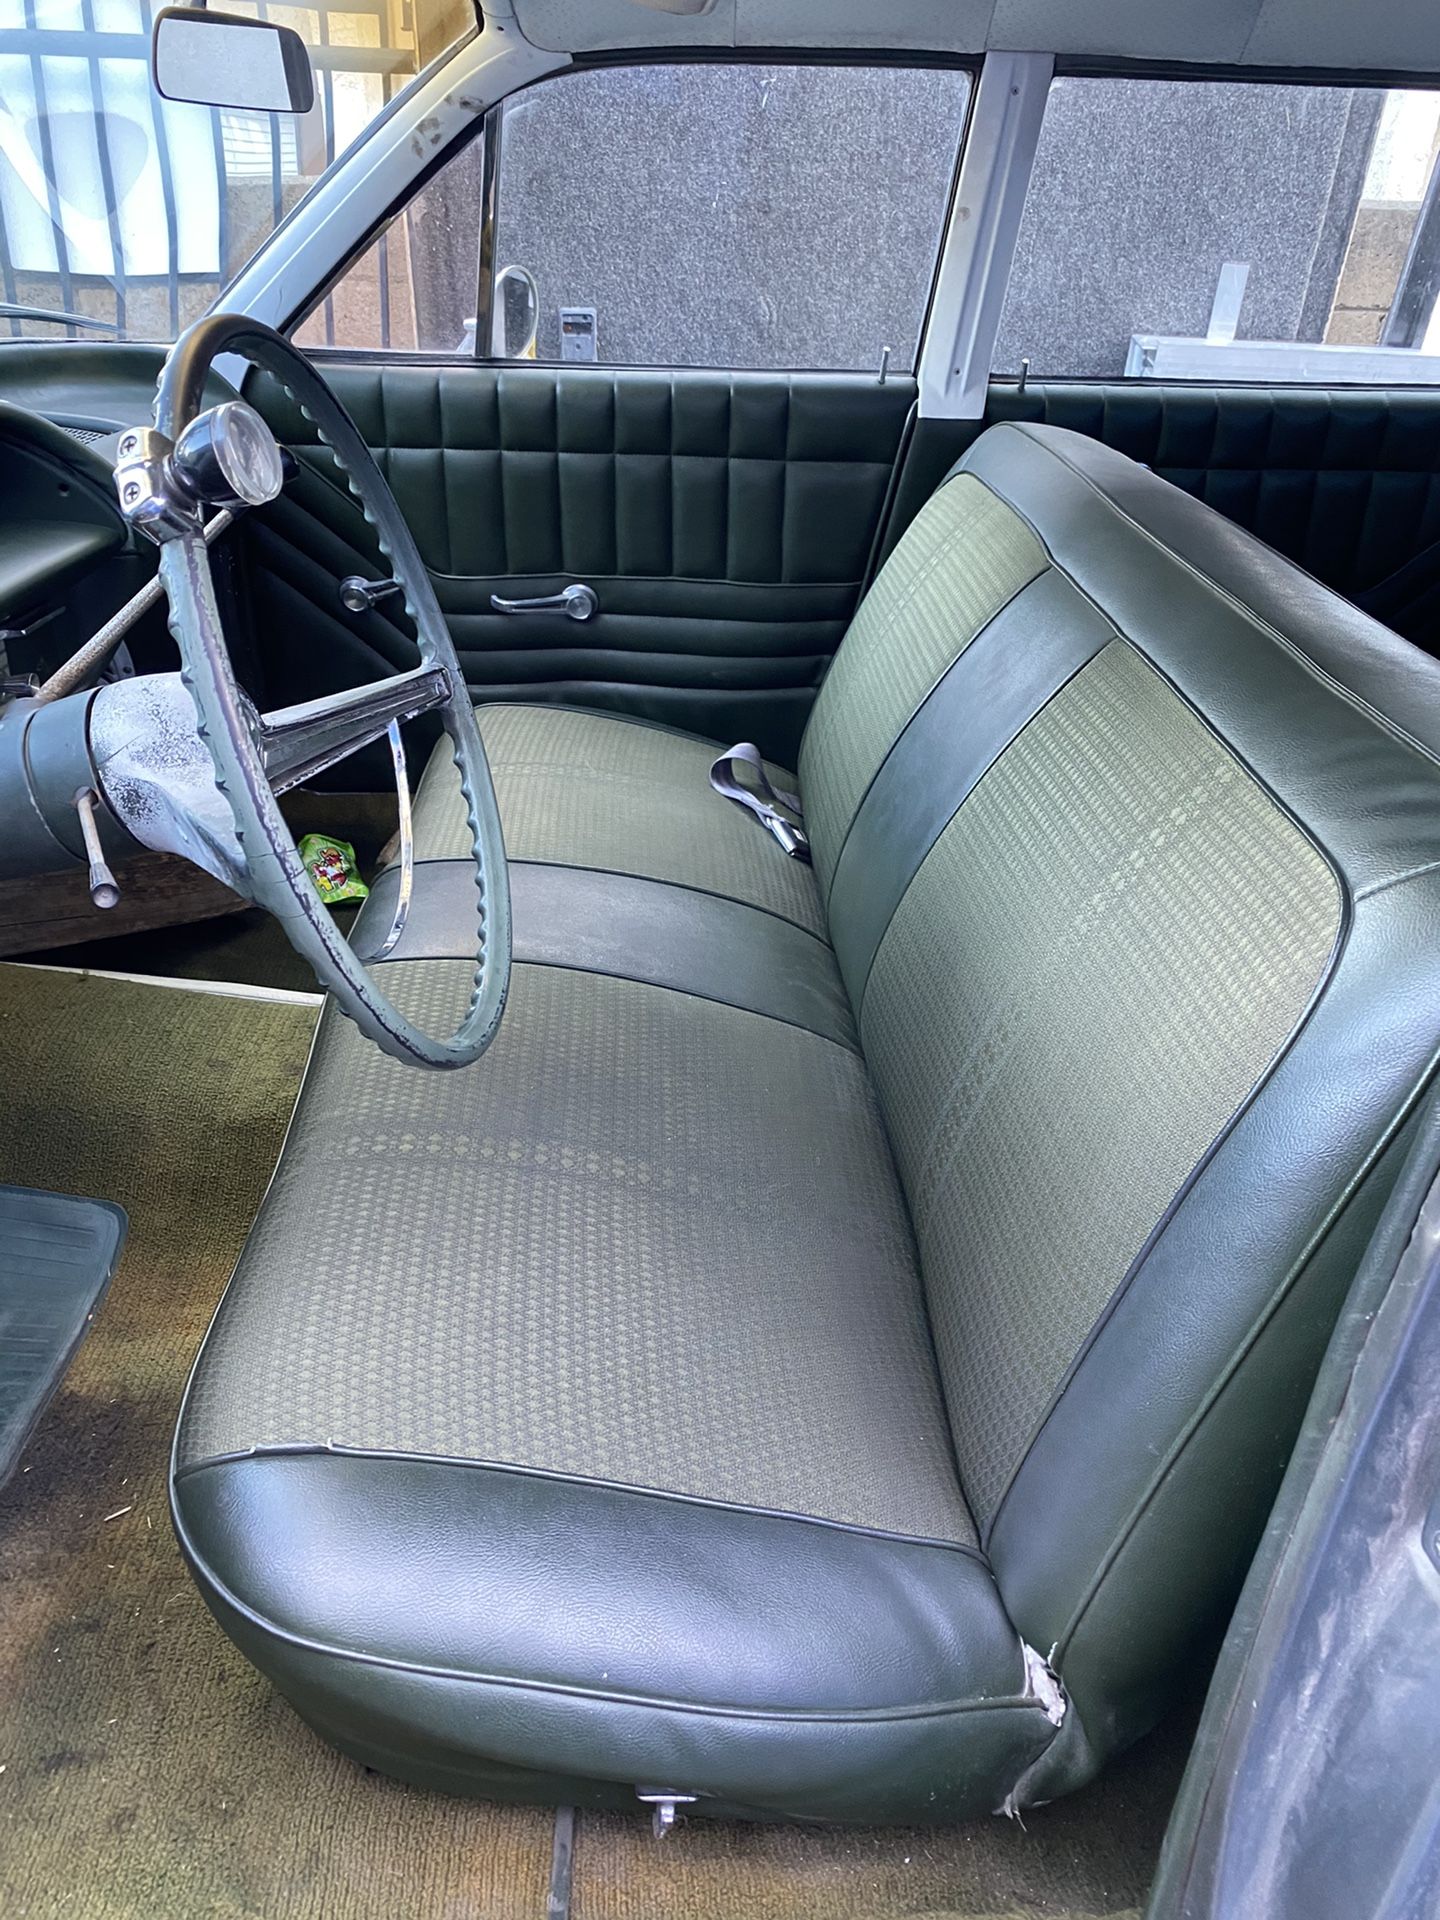 1963 Chevy Impala station wagon